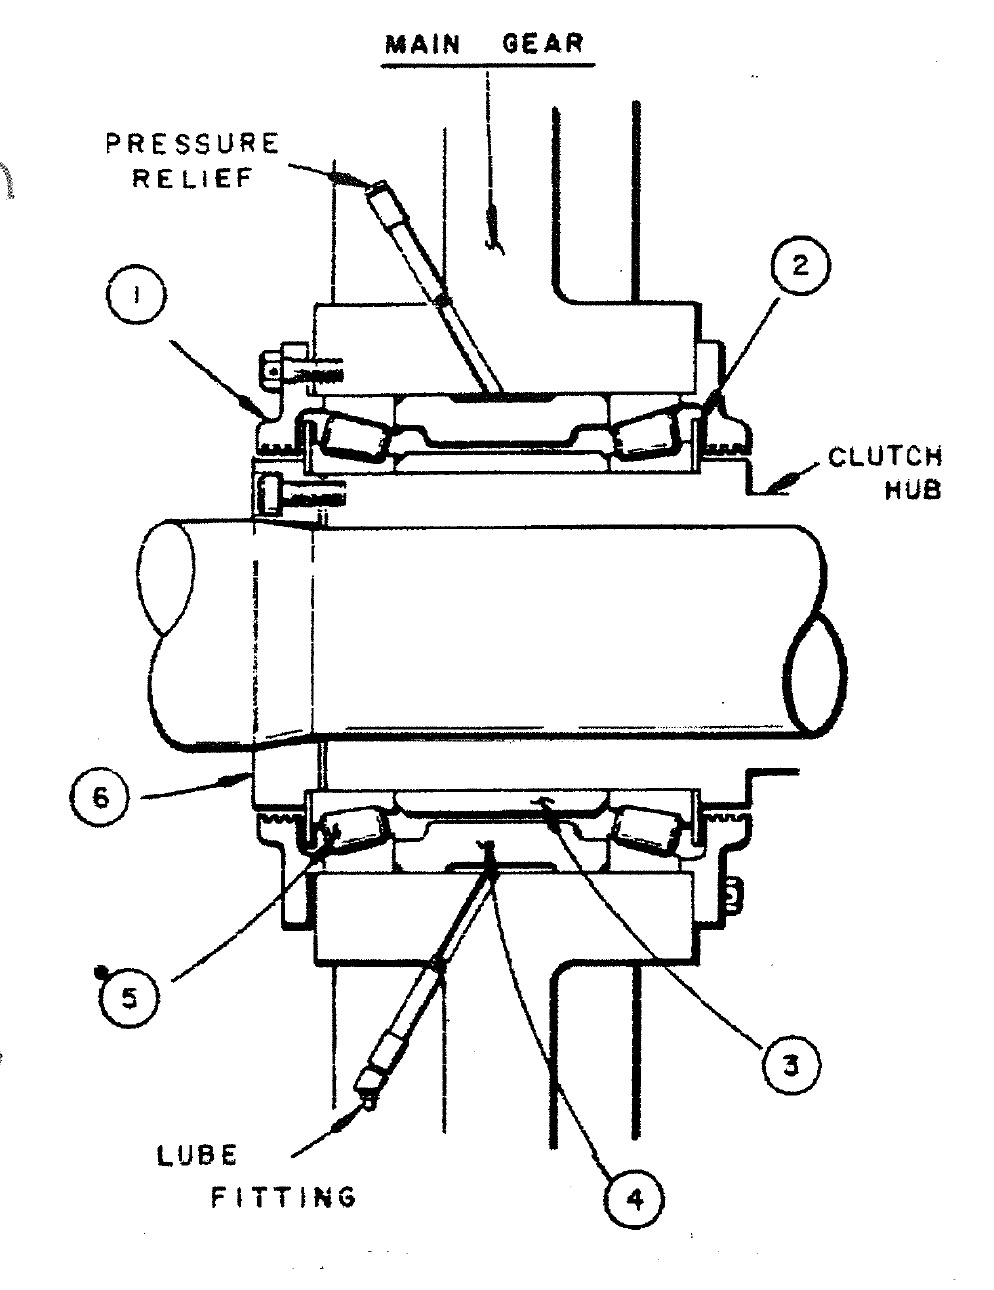 Main Bearing Gear or Flywheel R-10821